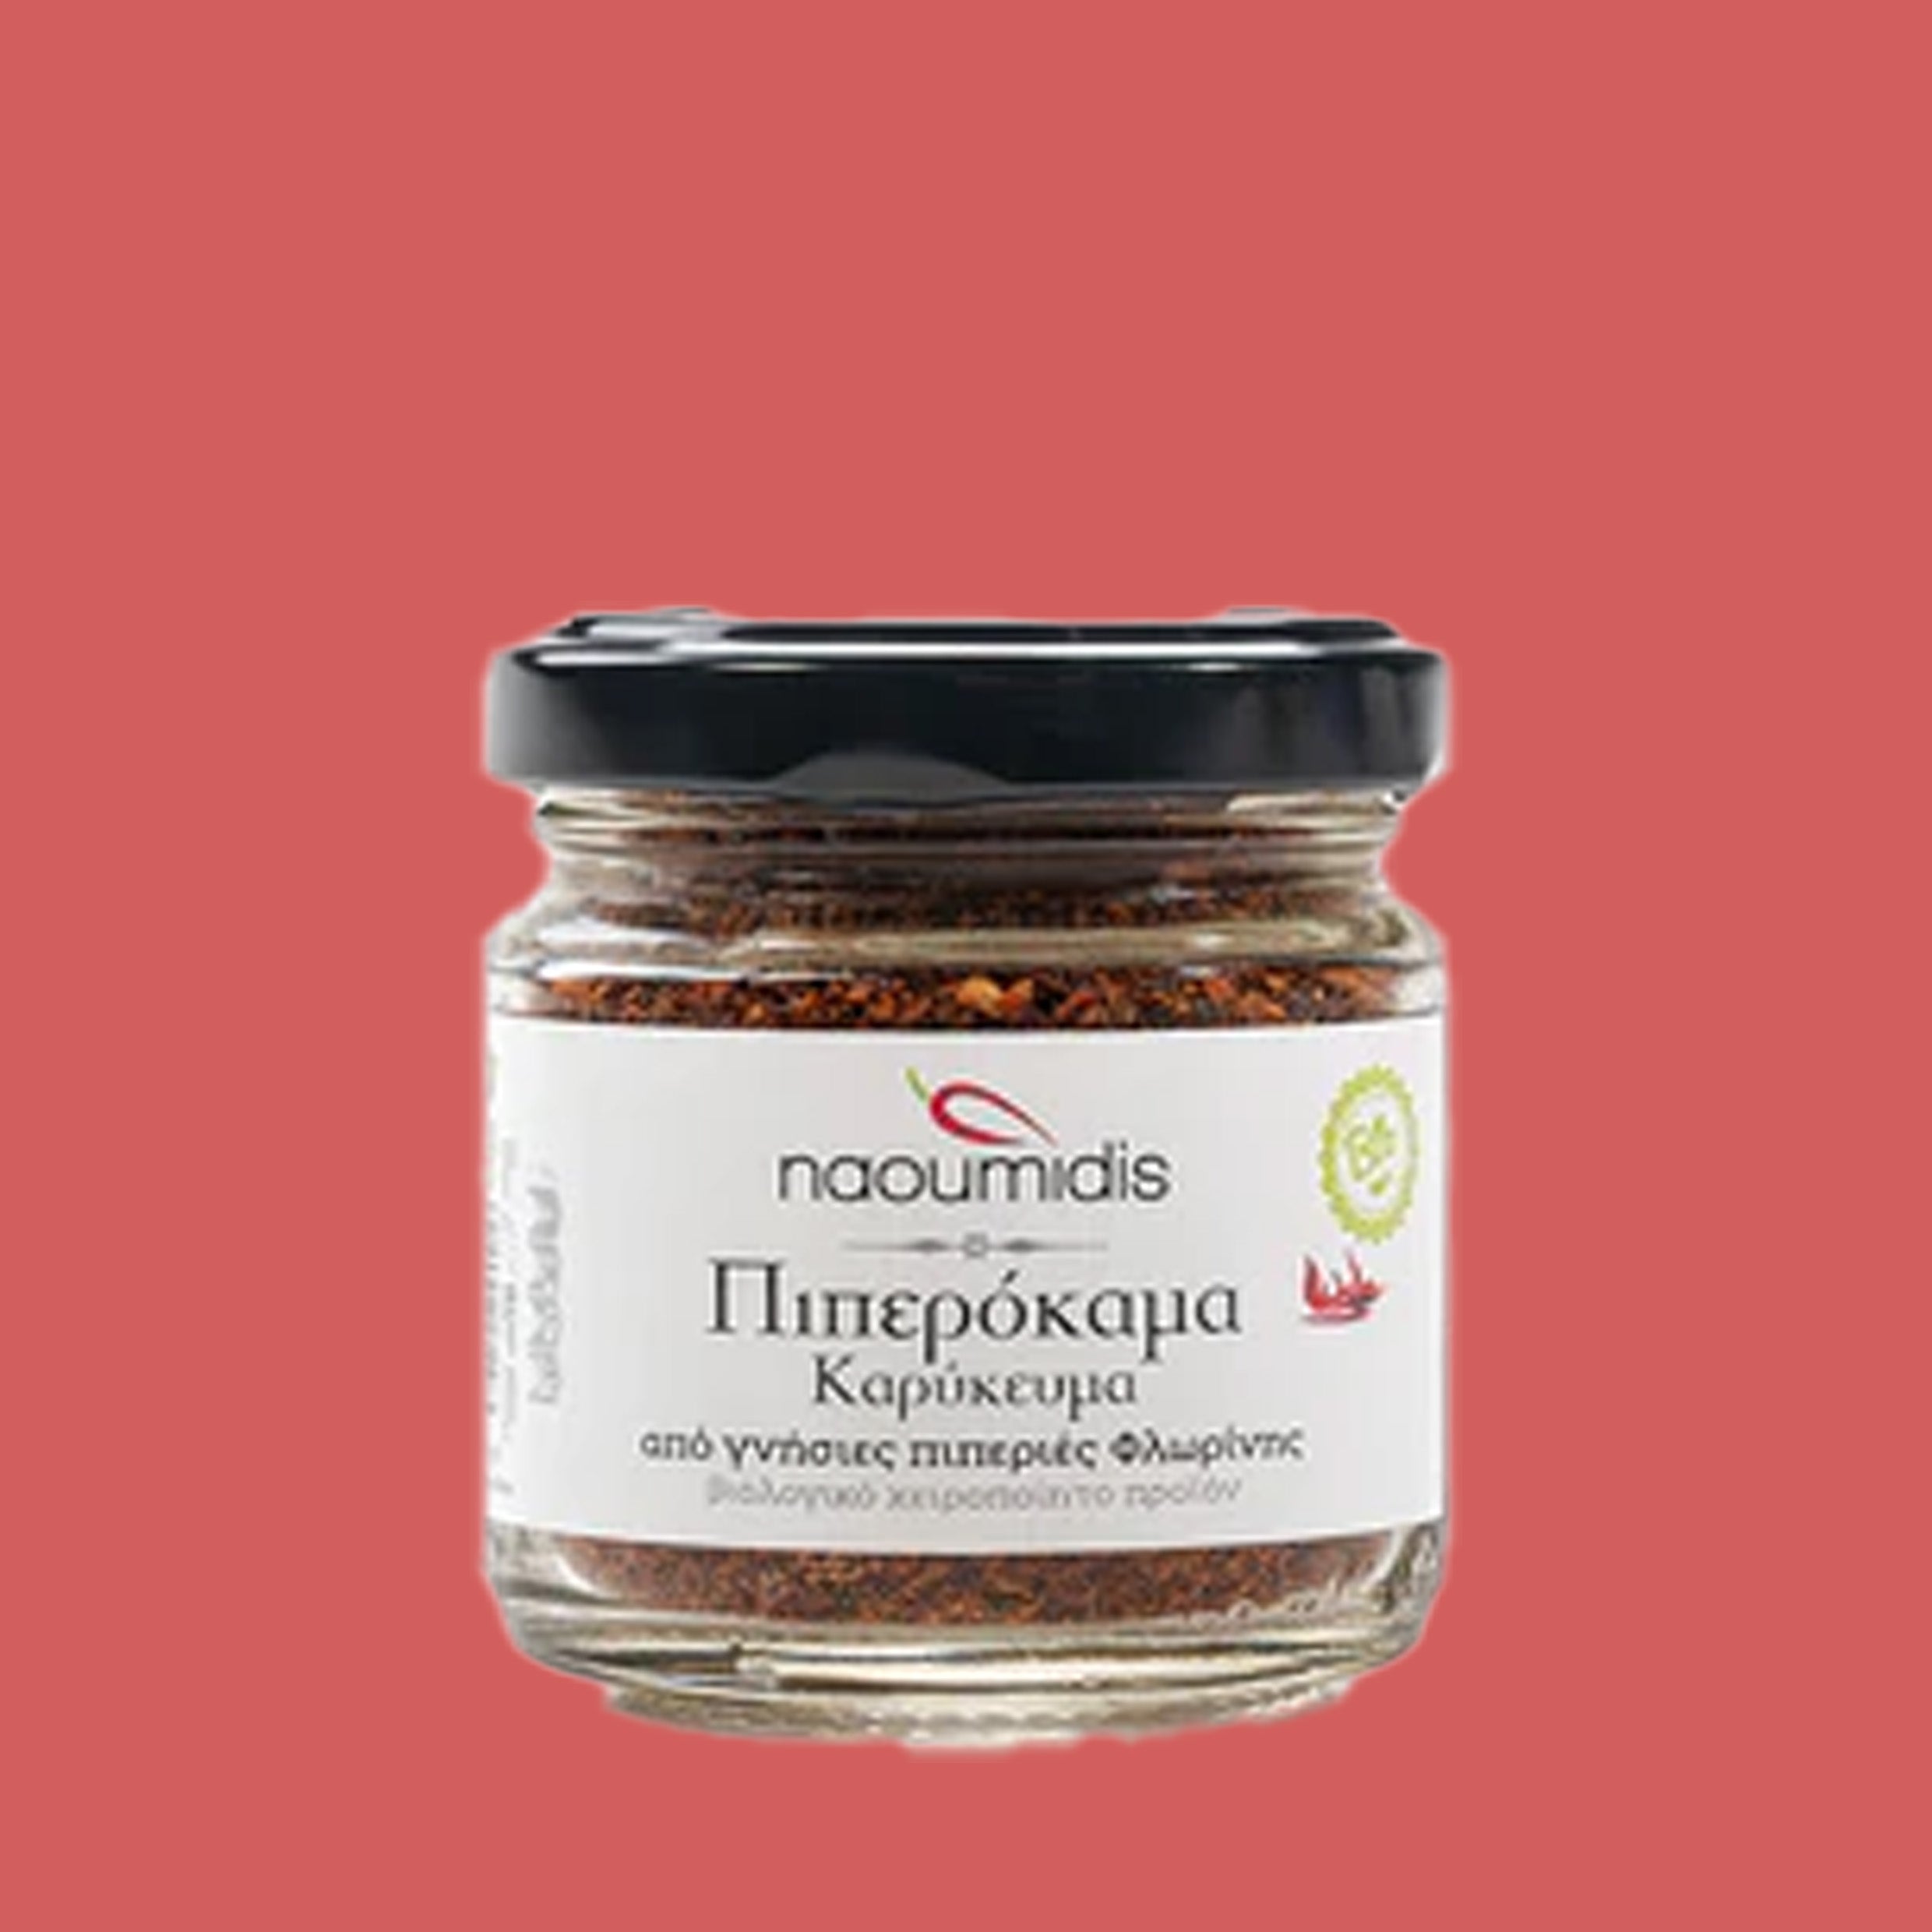 Piperokama - organic paprika spice, smoked, spicy